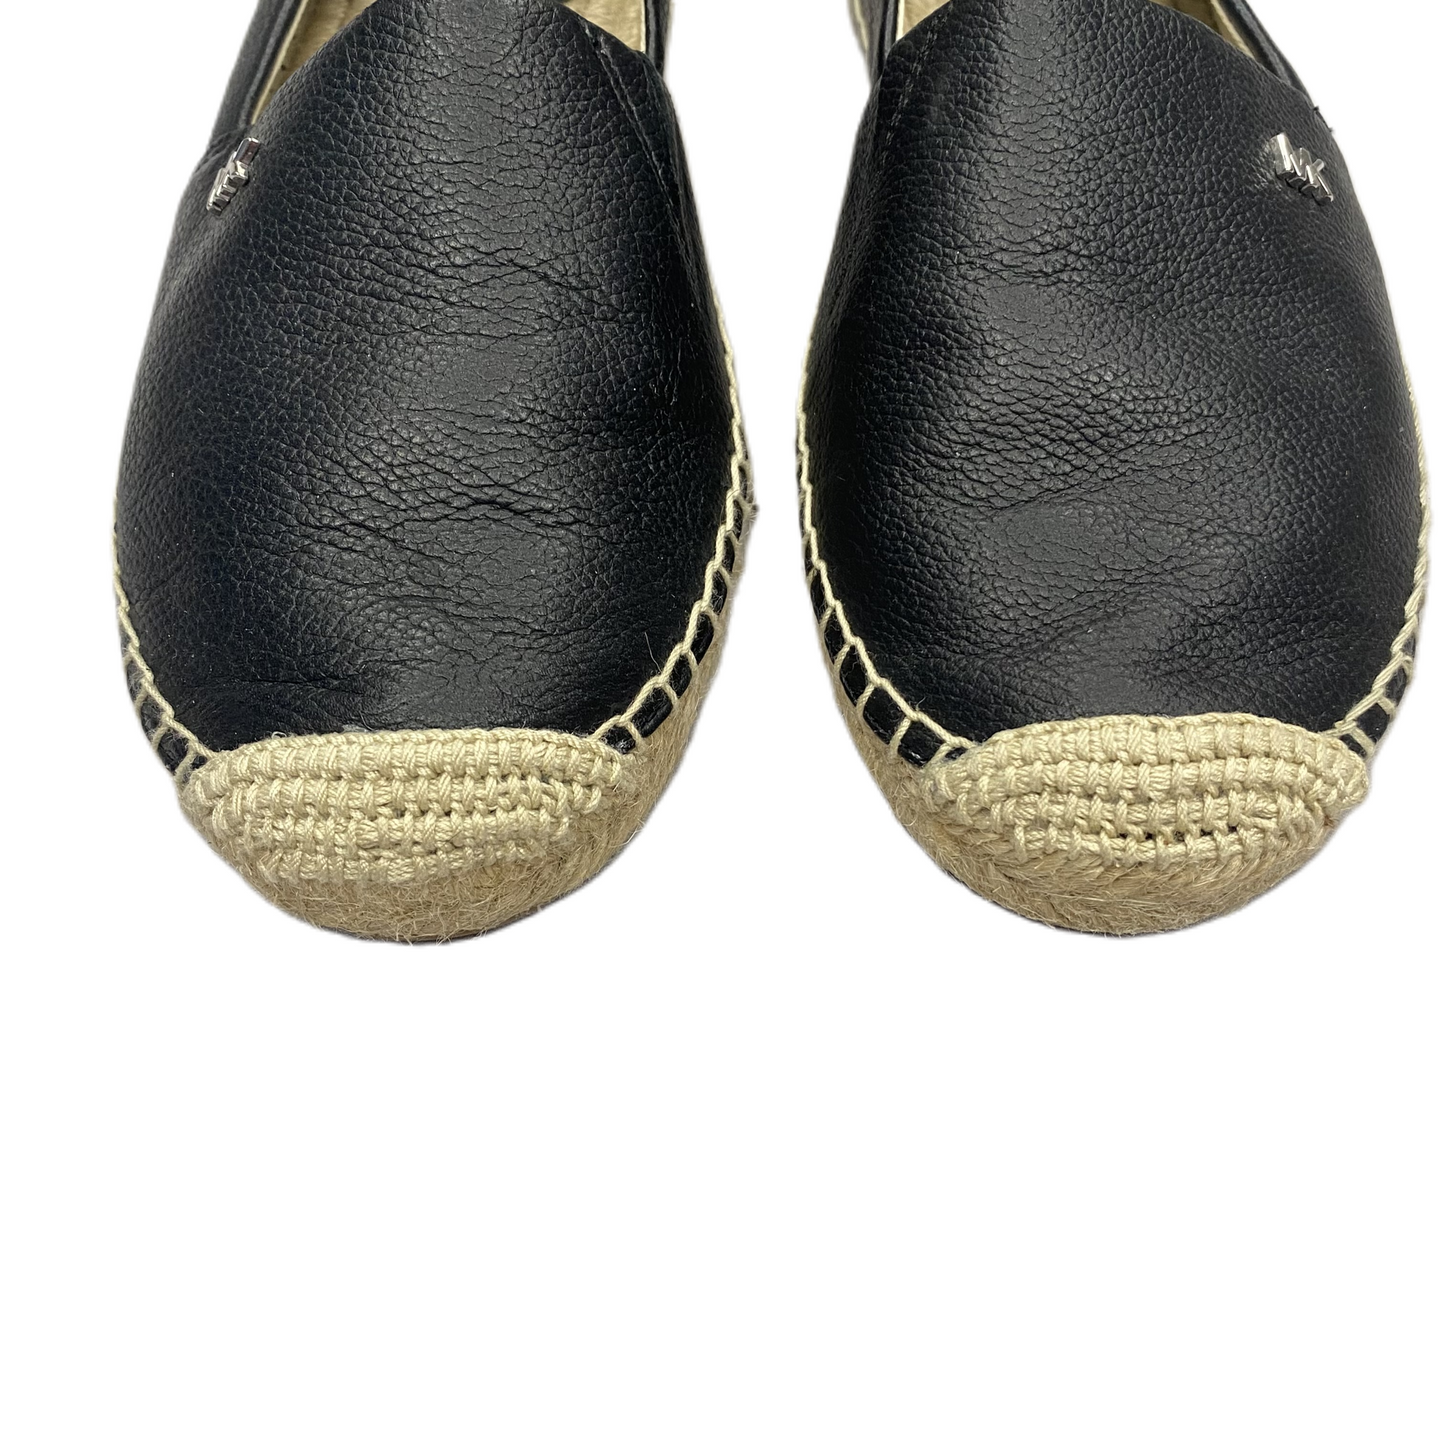 Black Shoes Flats Espadrille By Michael By Michael Kors, Size: 7.5